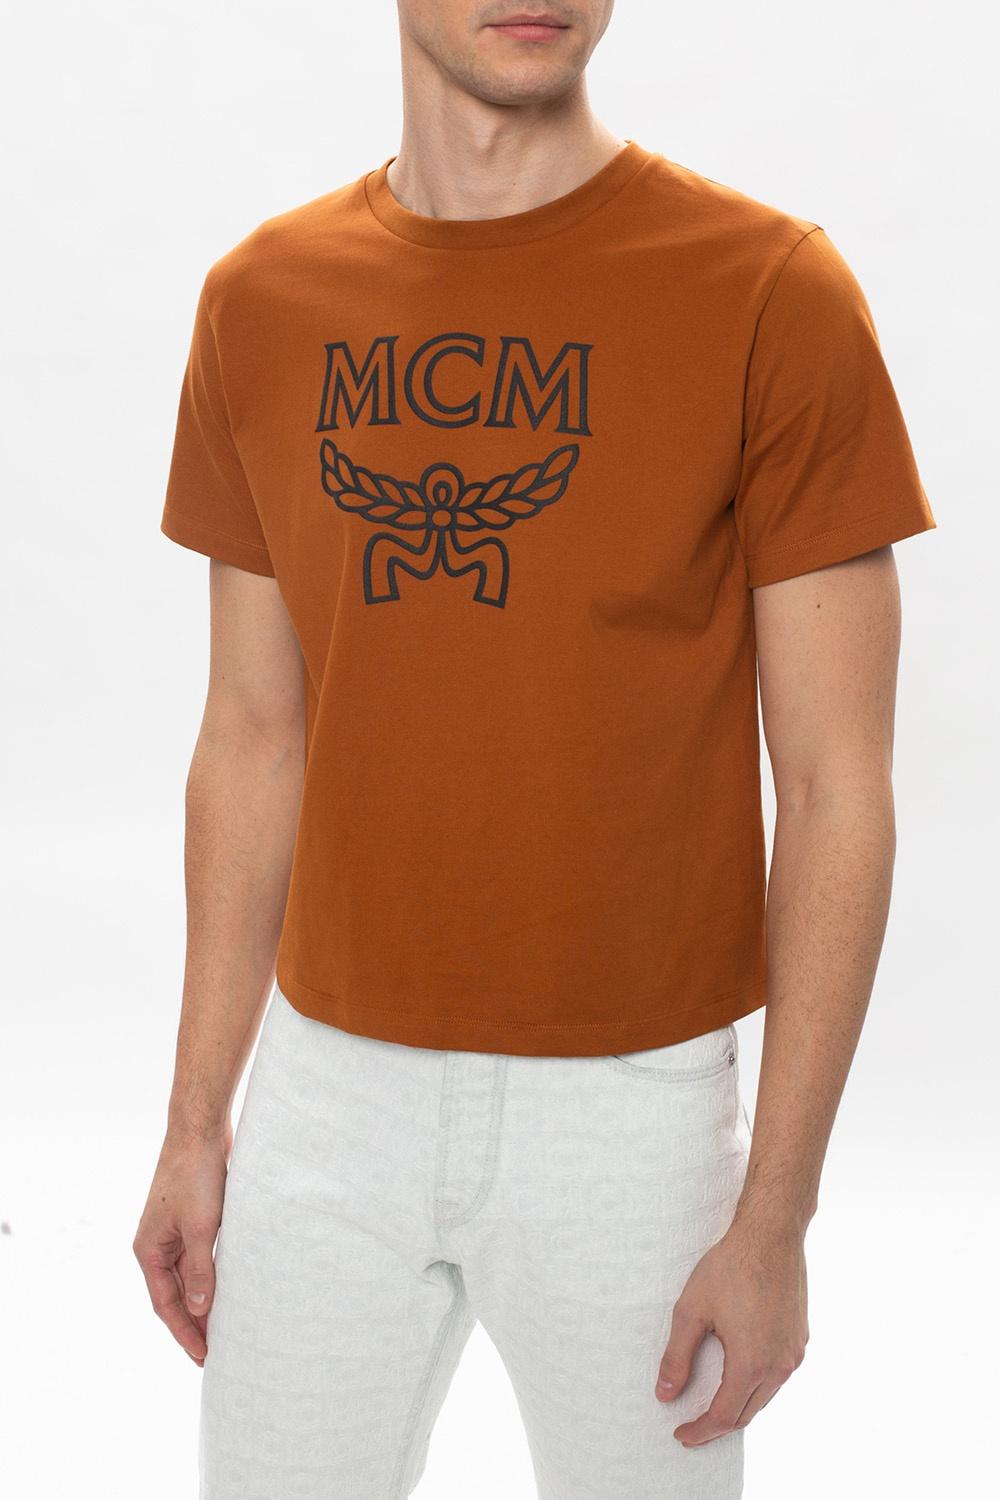 MCM Cotton Logo T-shirt Brown for Men - Lyst